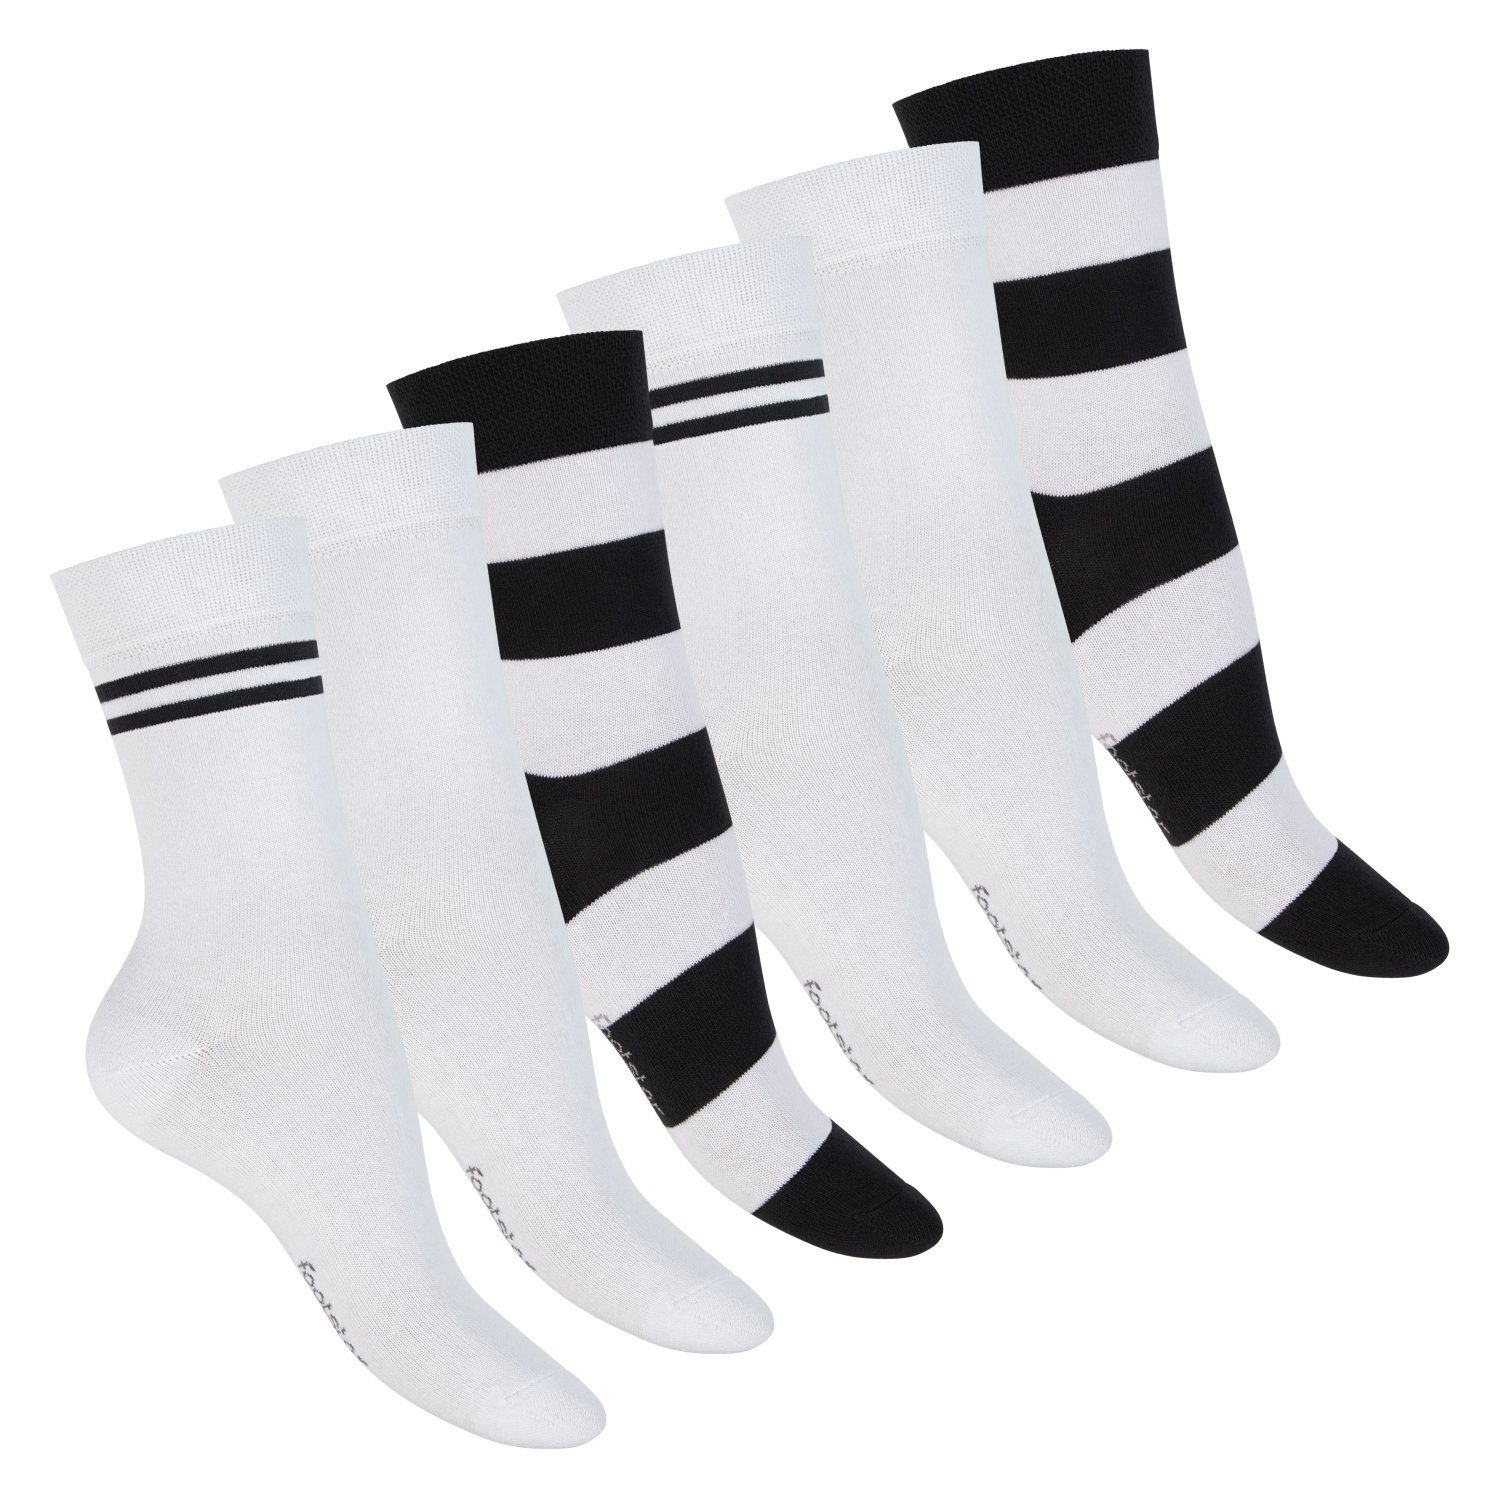 Ringel Damen Footstar Socken Paar) (6 Weiß Basicsocken